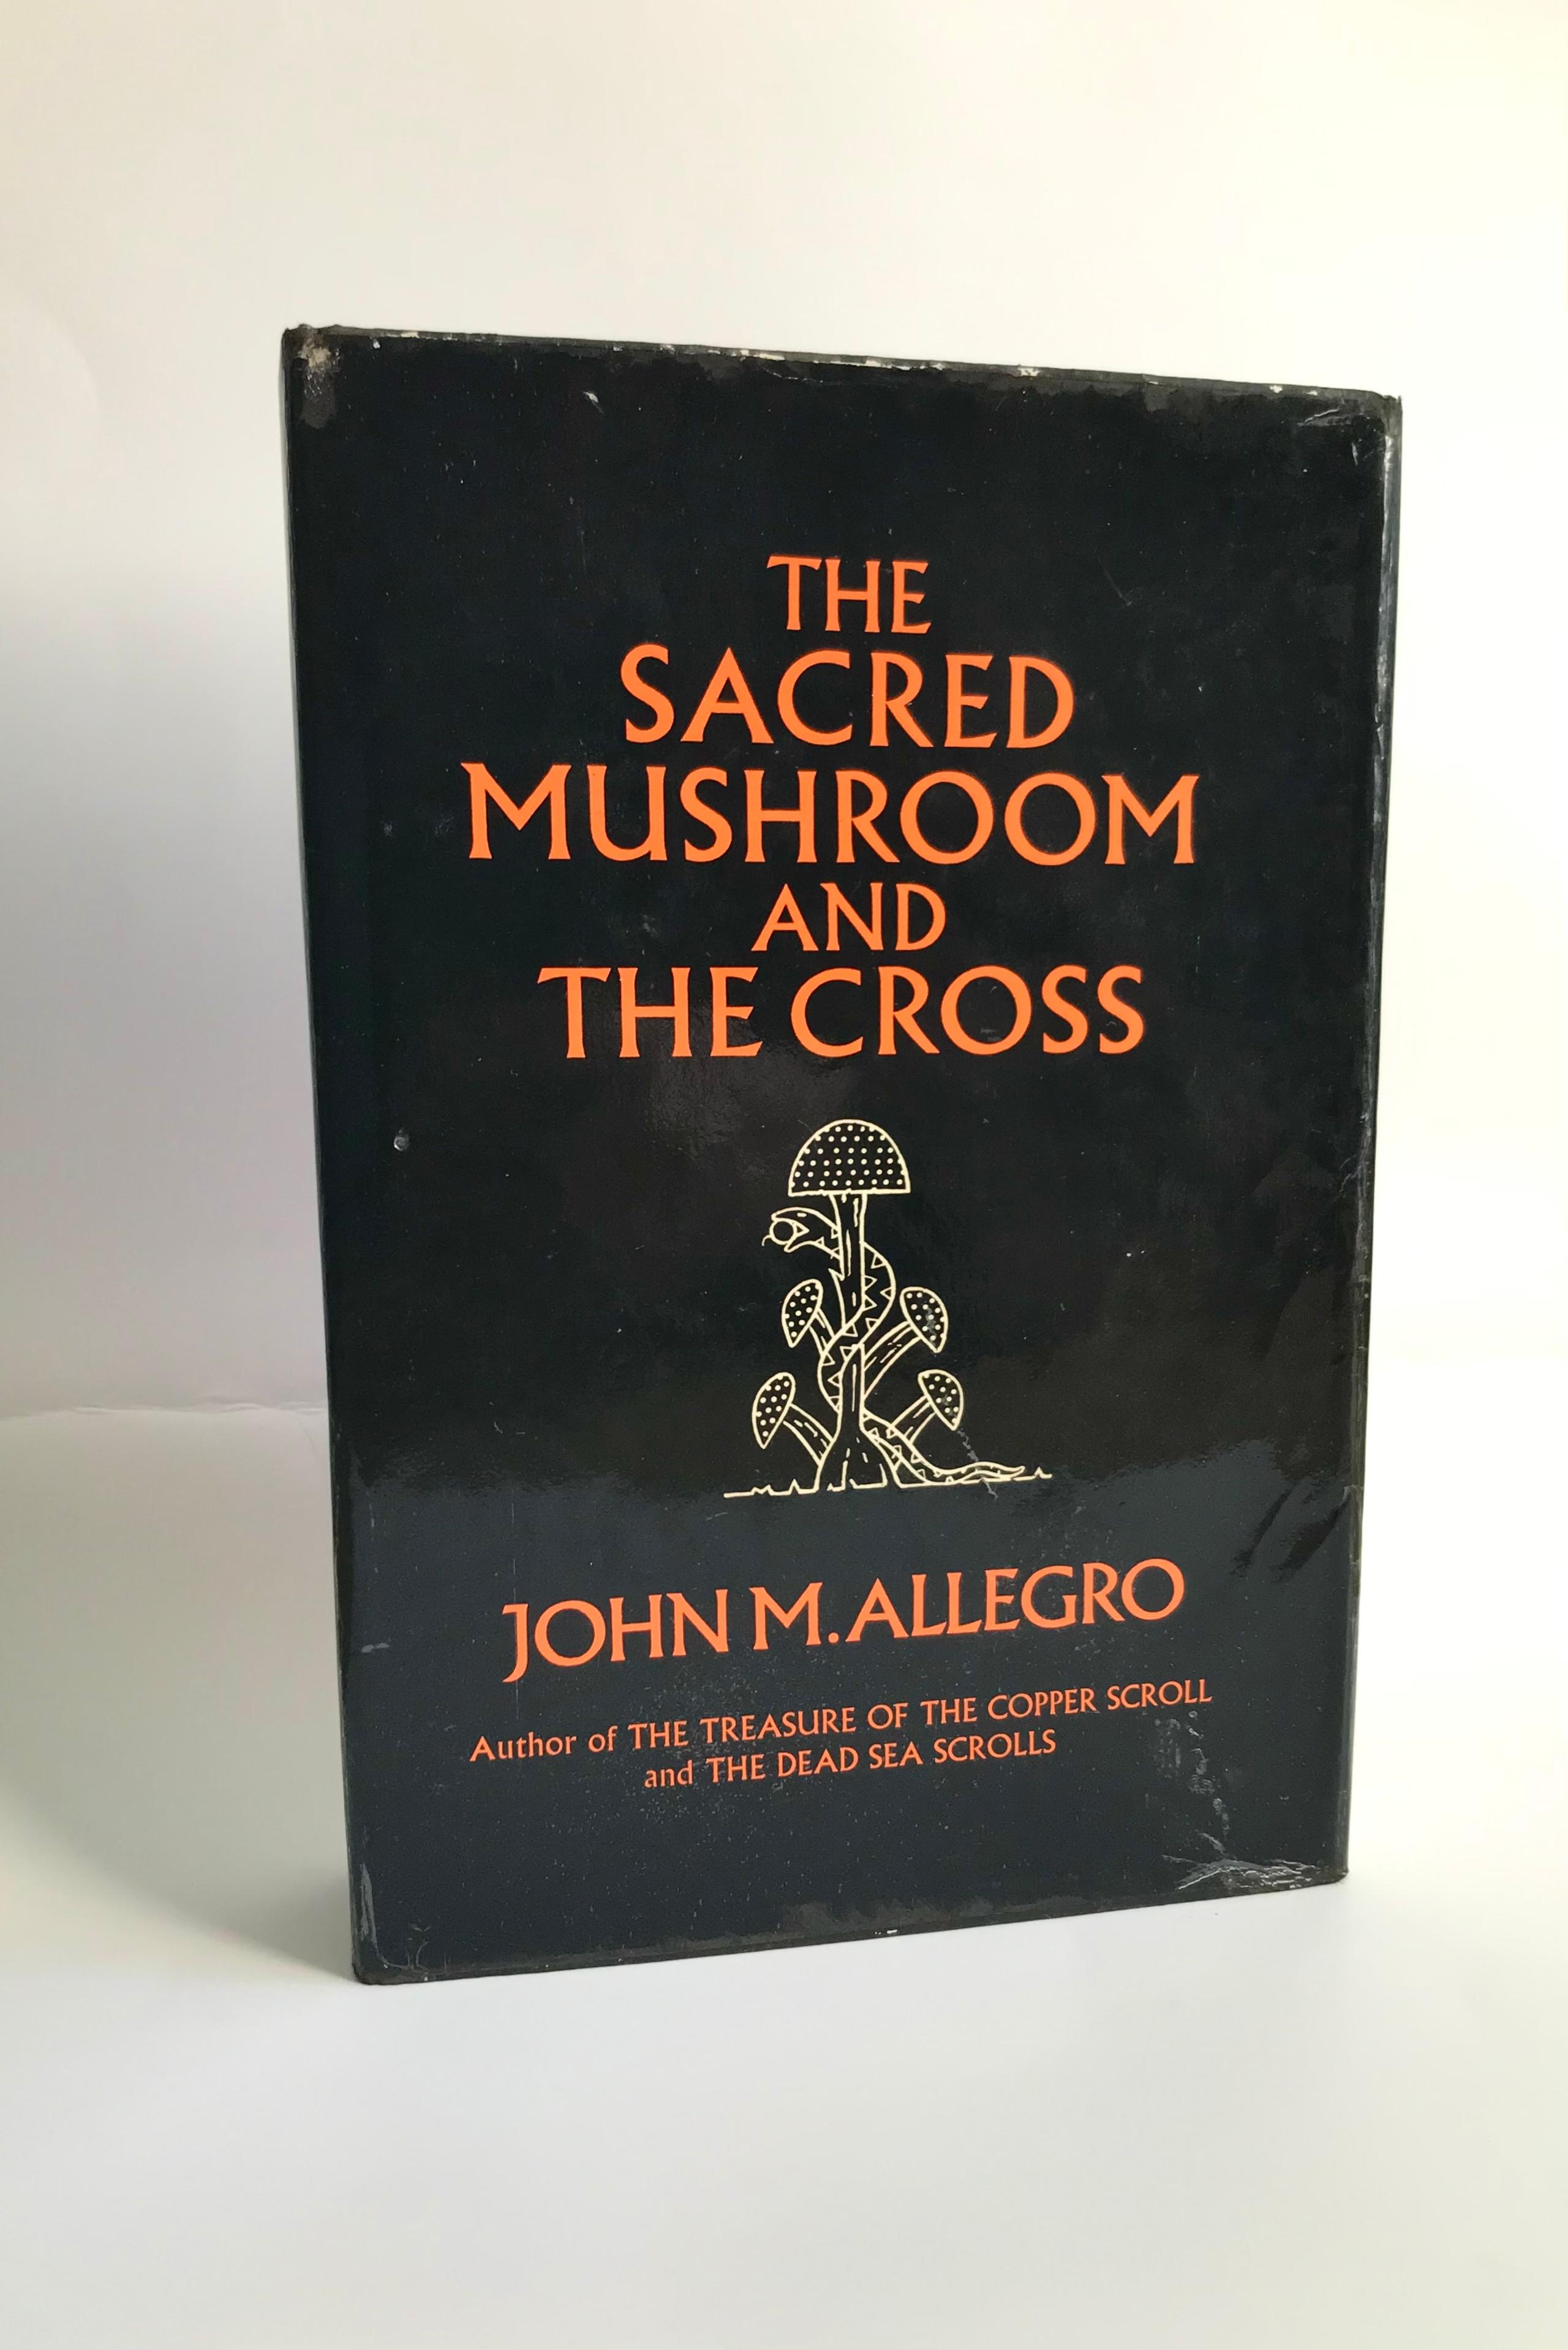 The Sacred Mushroom And The Cross by John M. Allegro